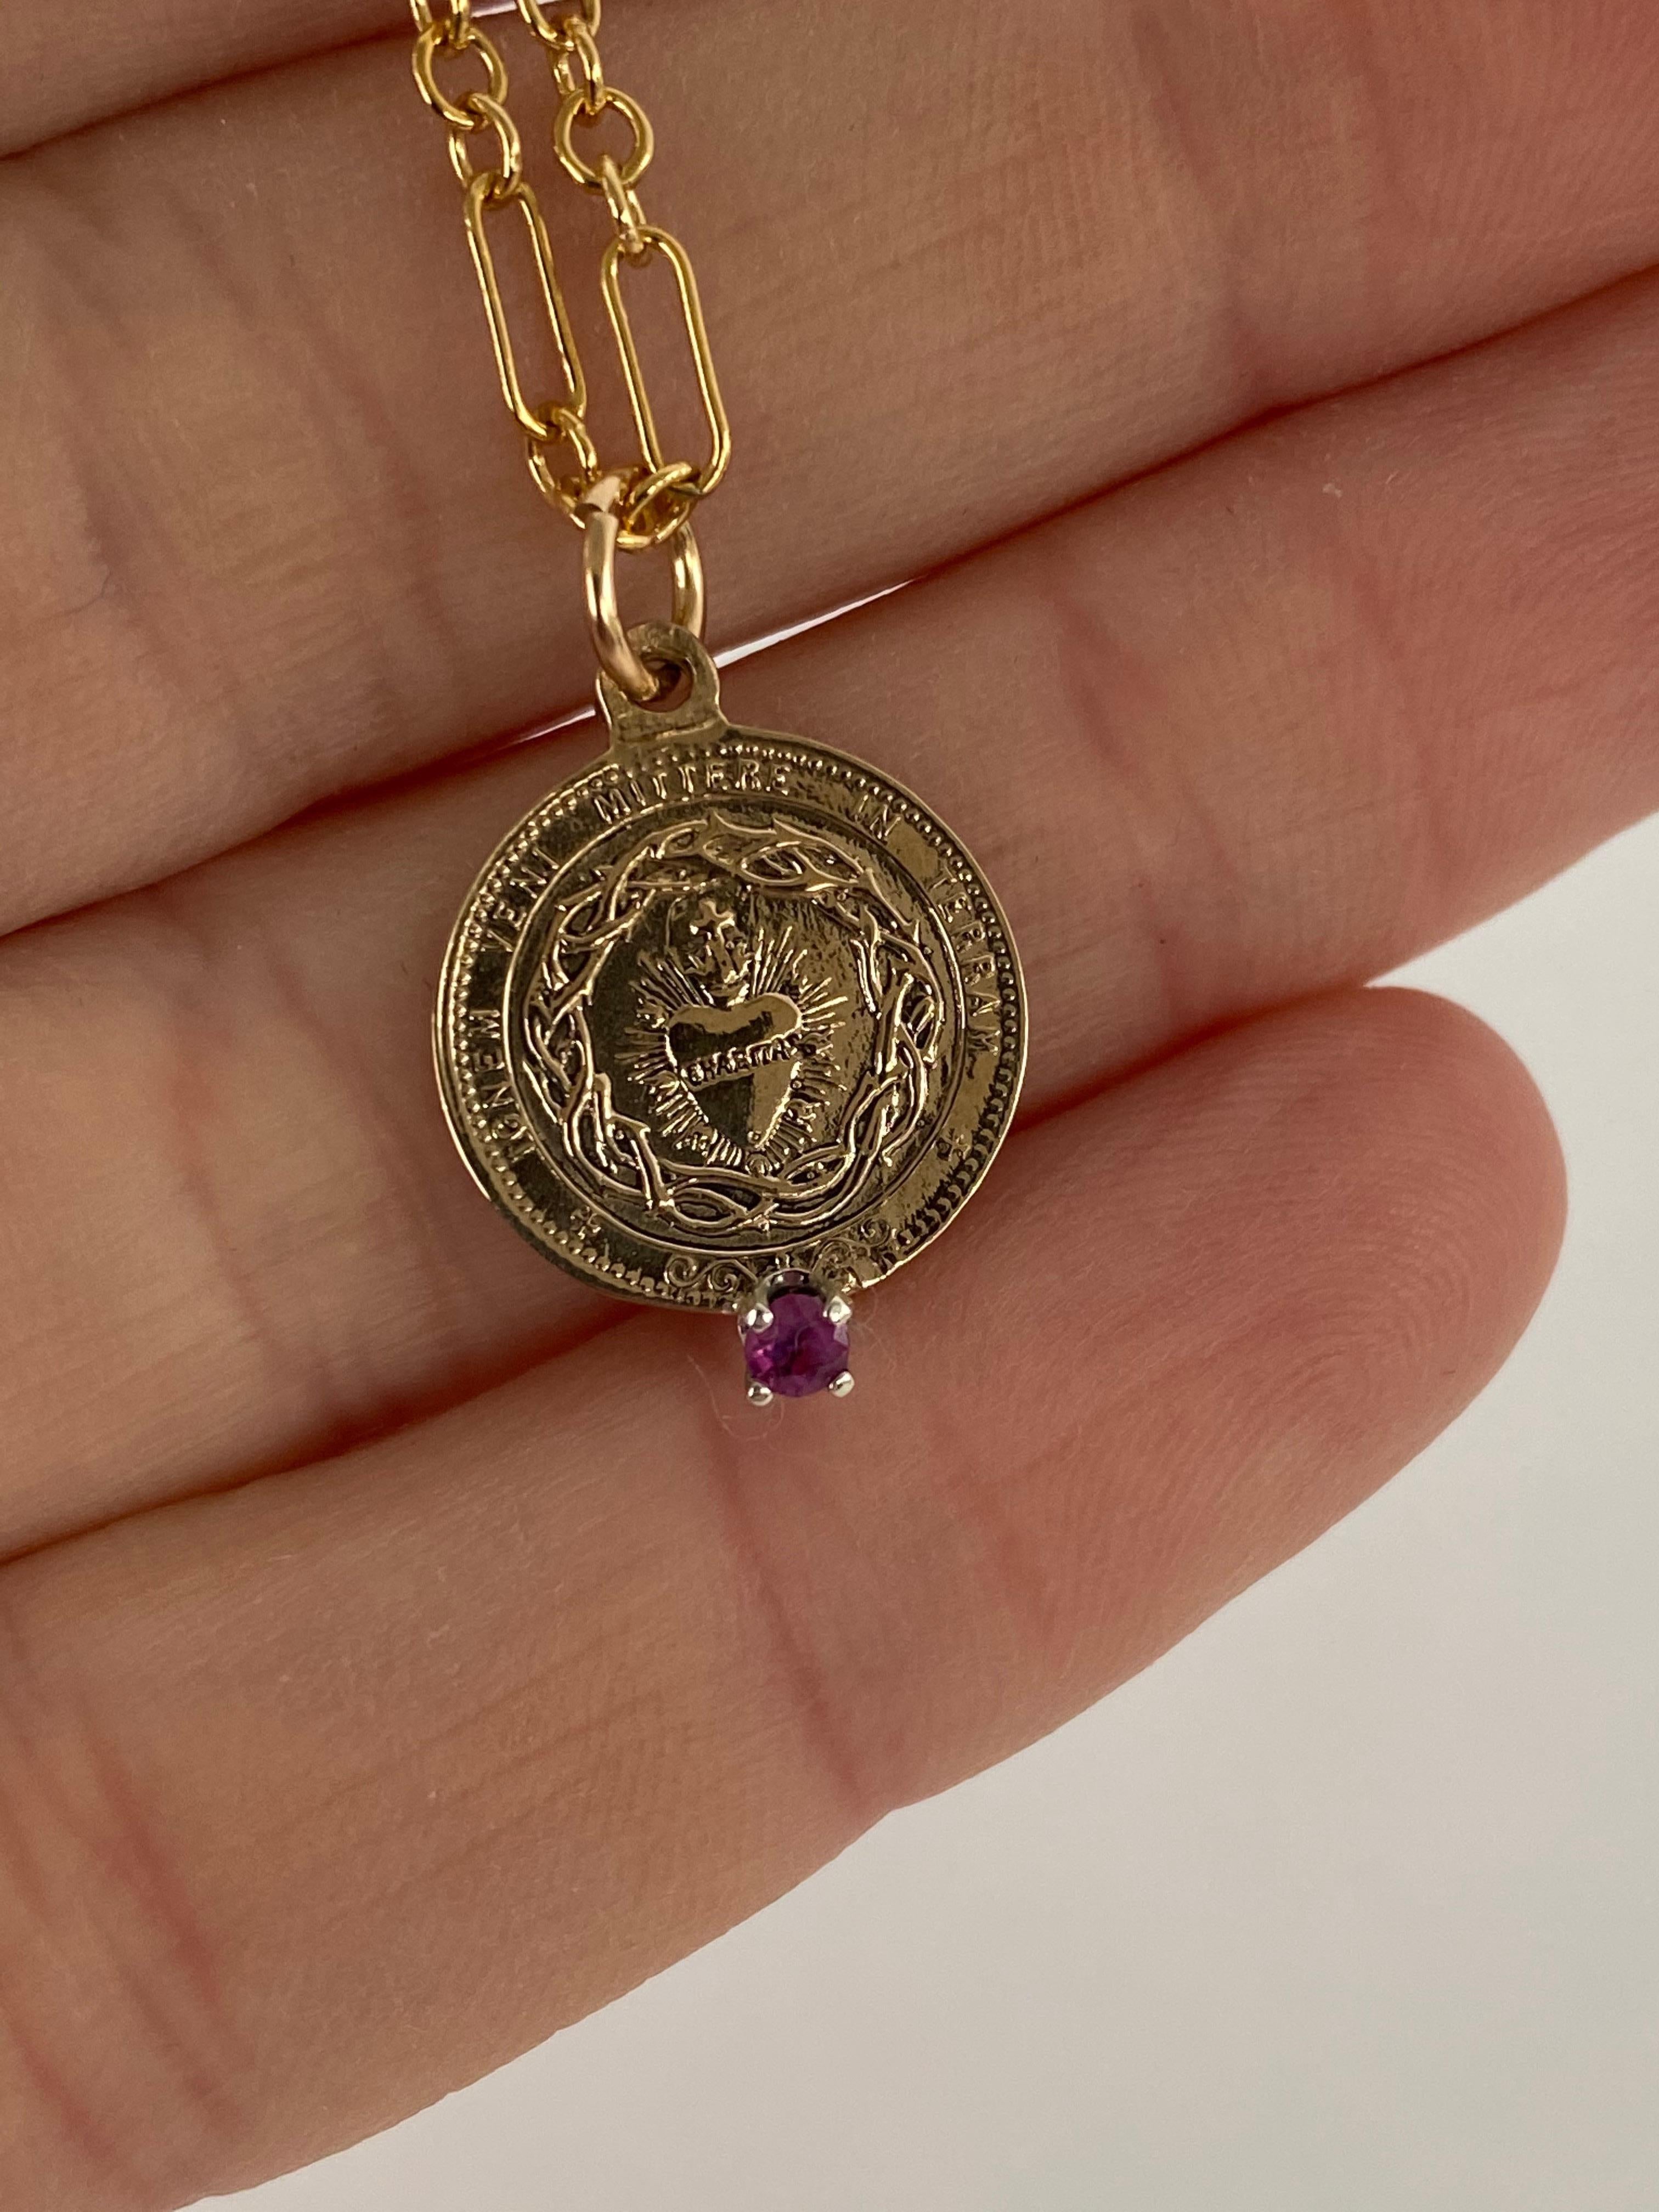 Brilliant Cut Tourmaline Sacred Heart Medal Pendant Chain Necklace J Dauphin For Sale